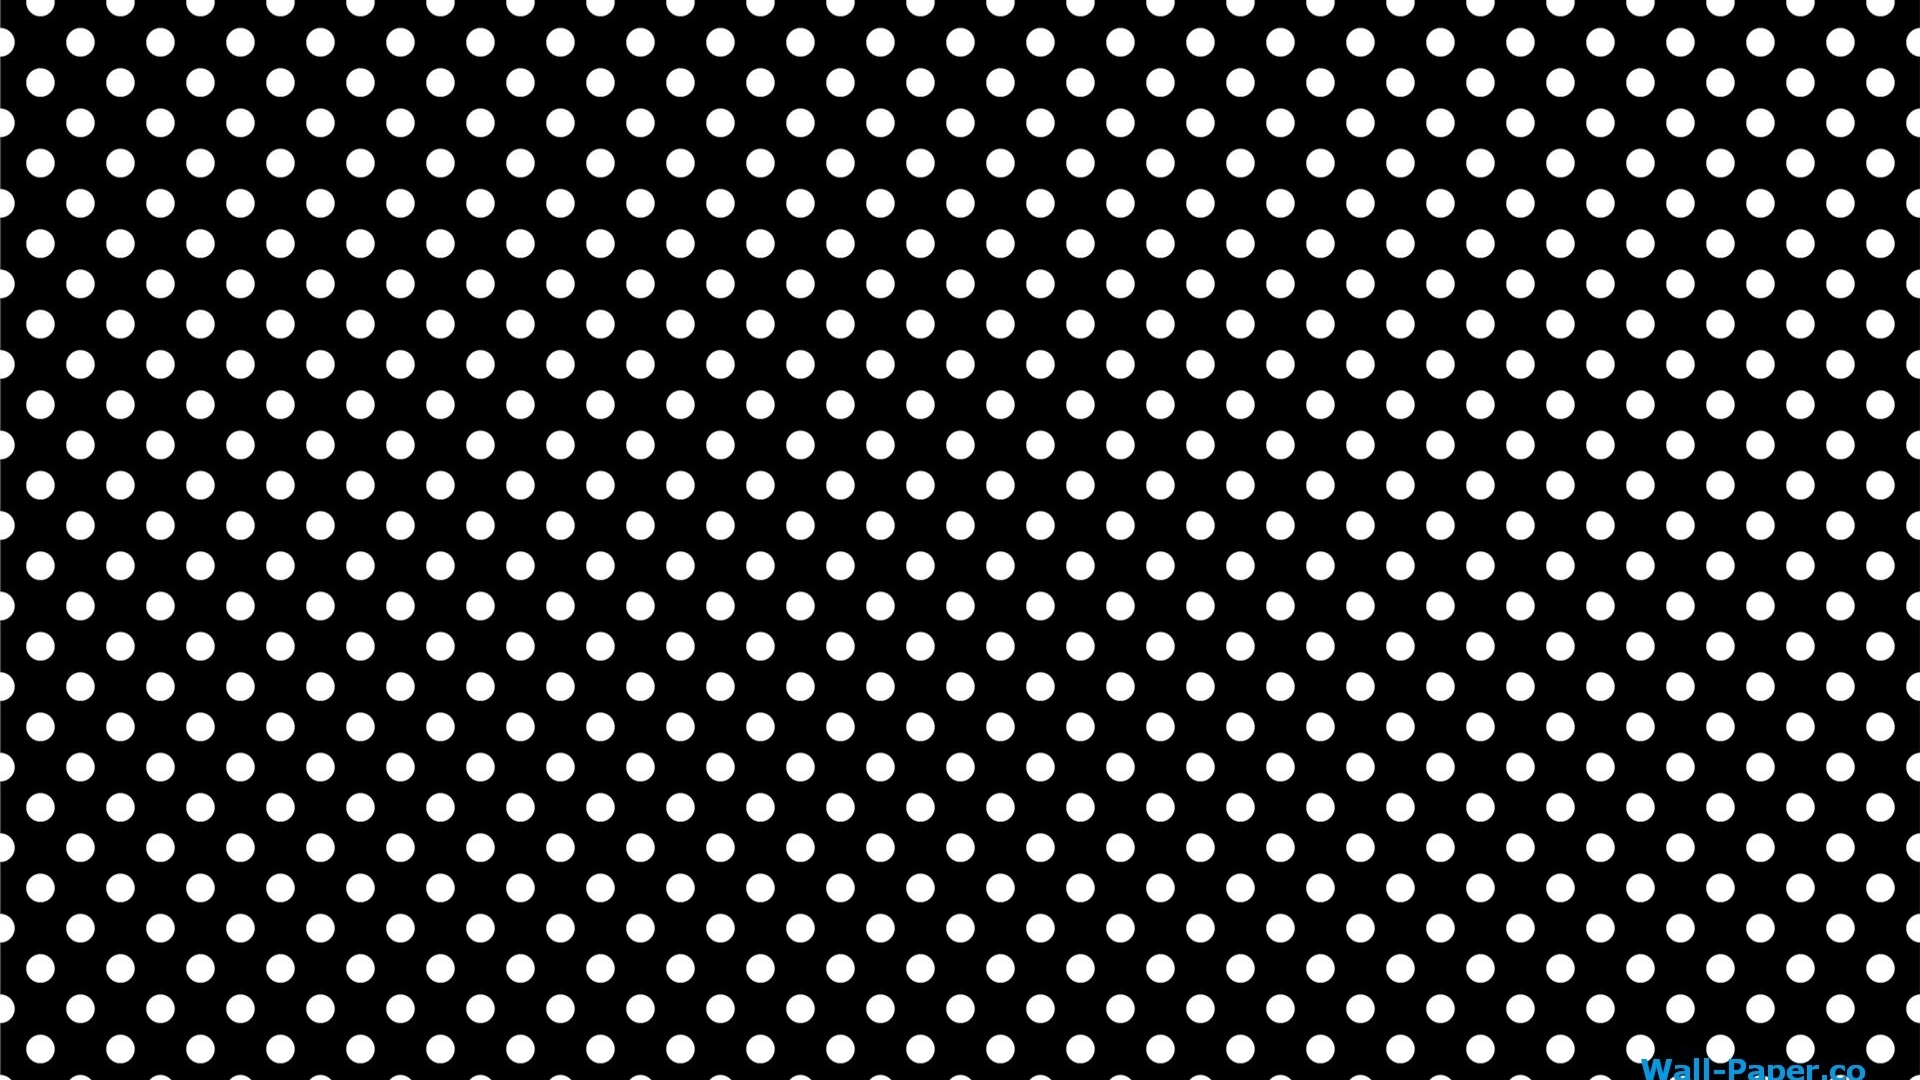 47+] Black and White Dot Wallpaper - WallpaperSafari